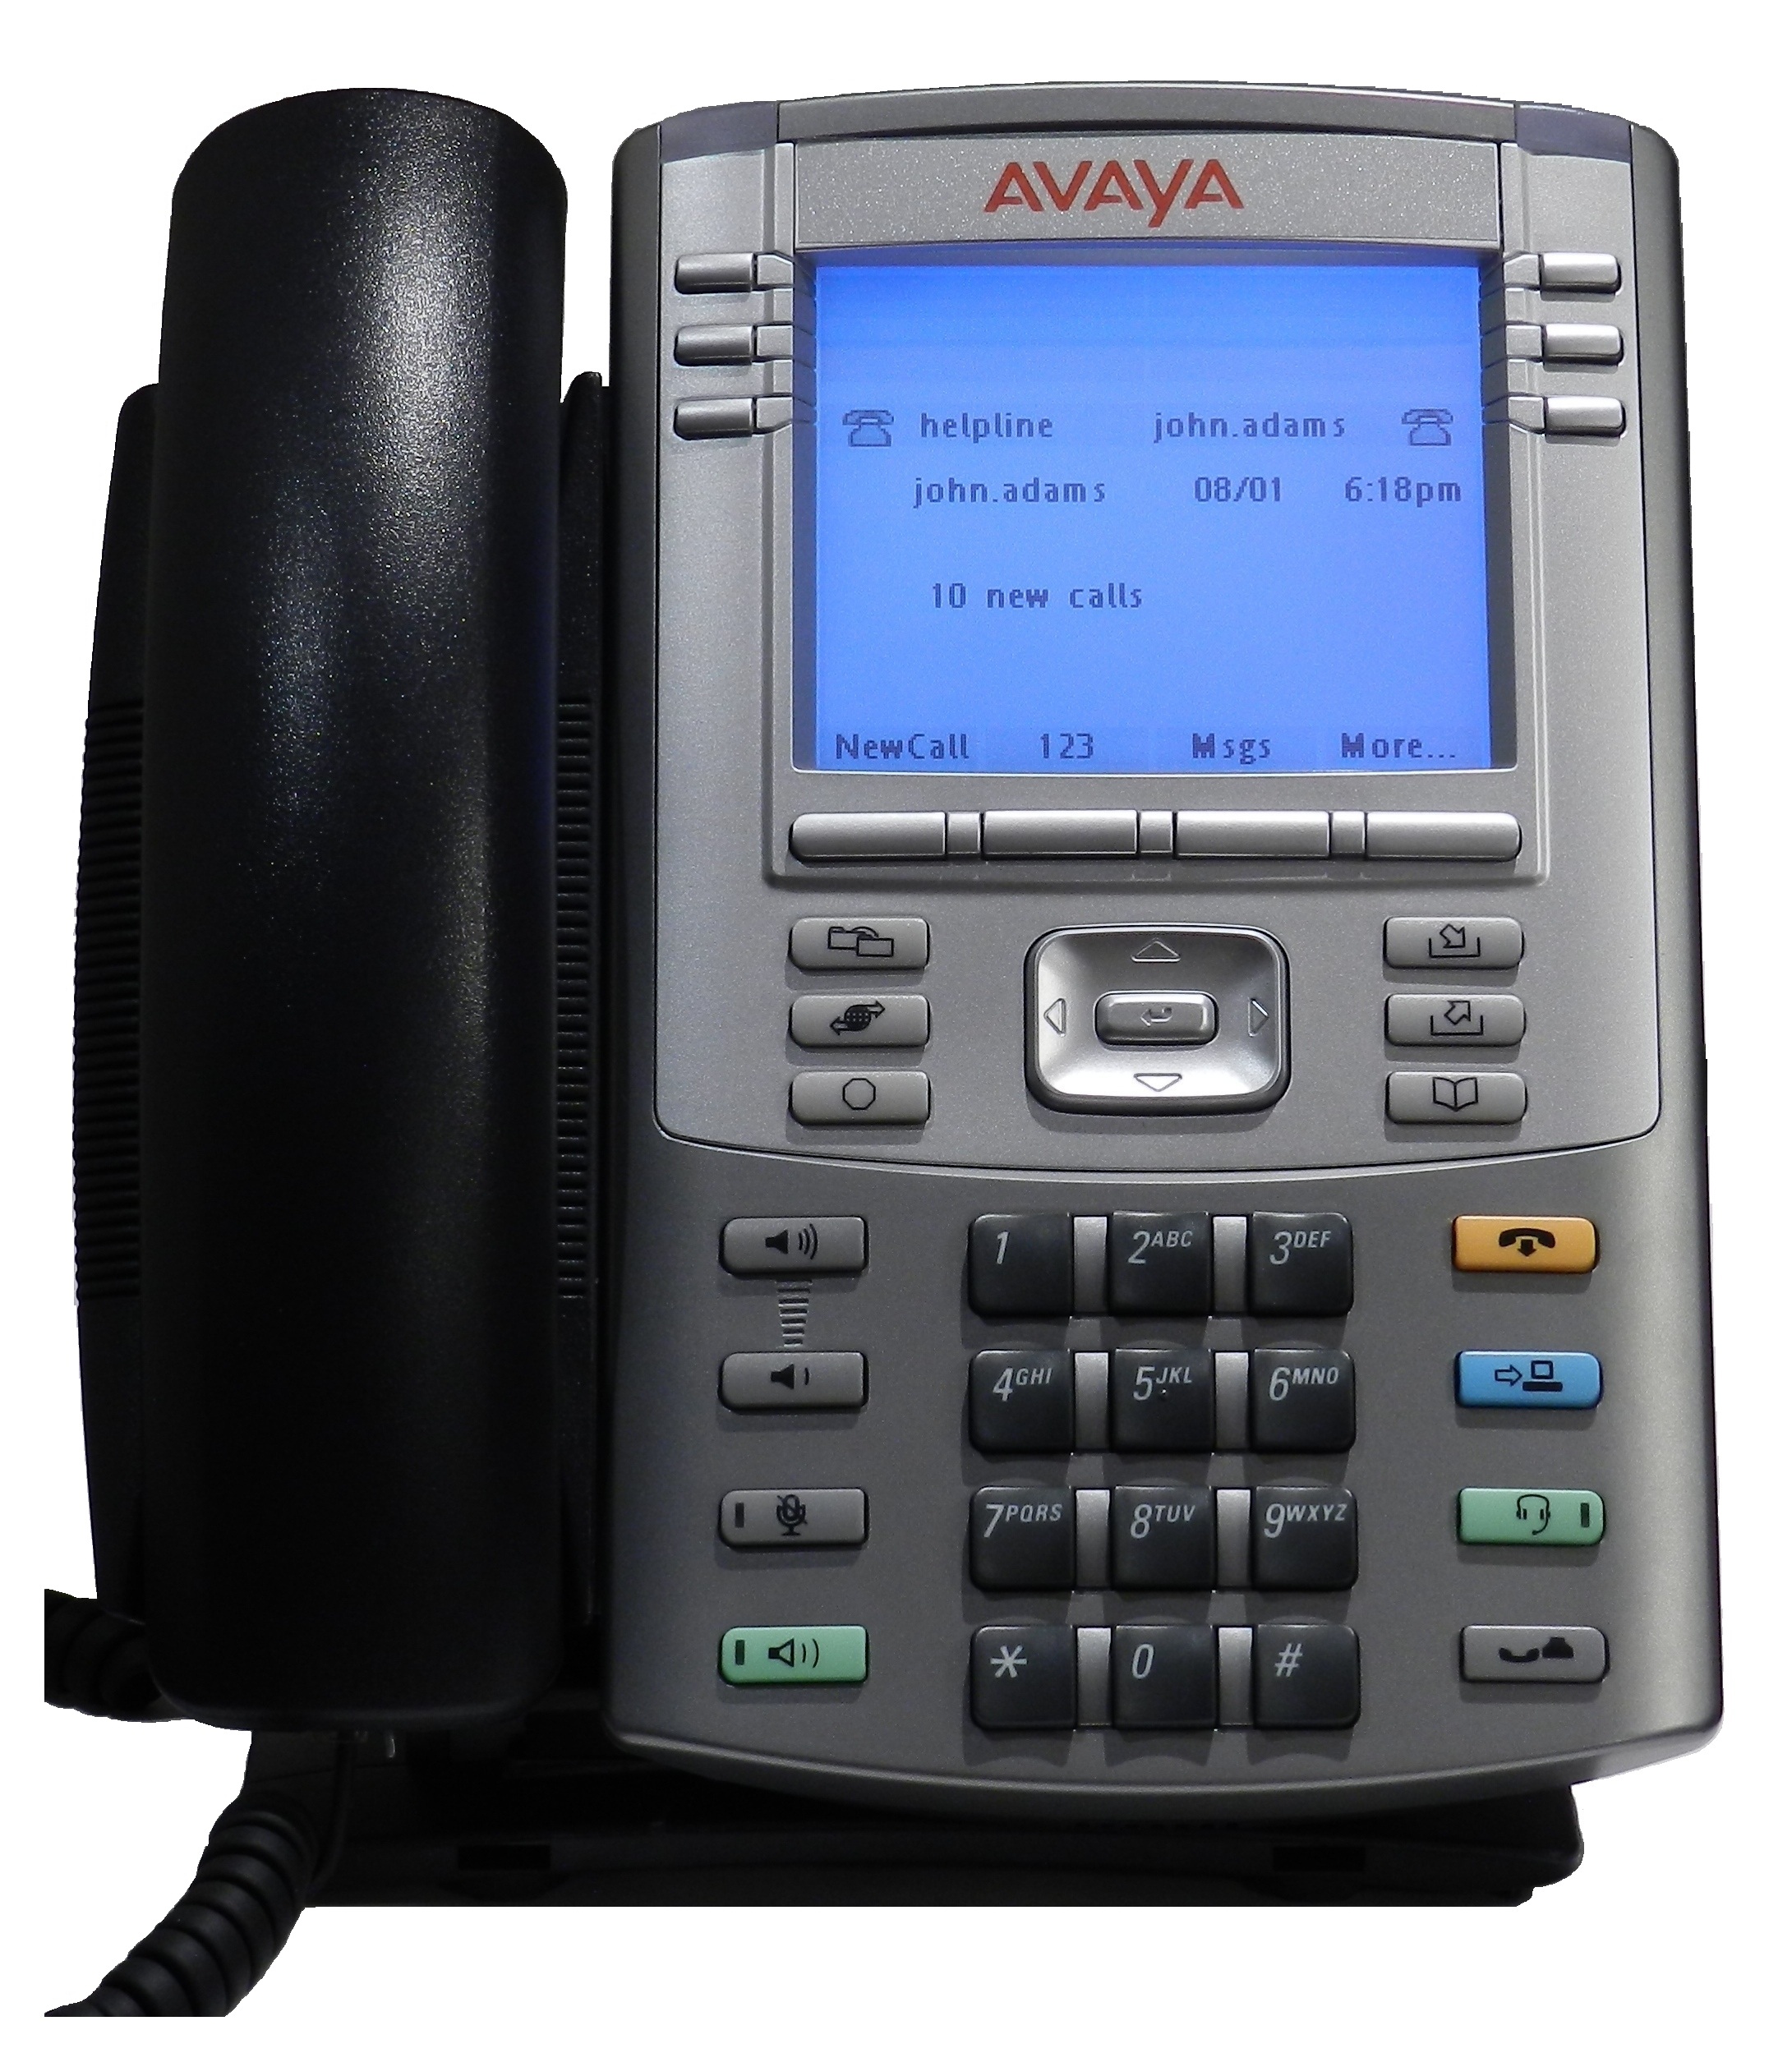 Avaya Phone by Wikipedia user Geek2003